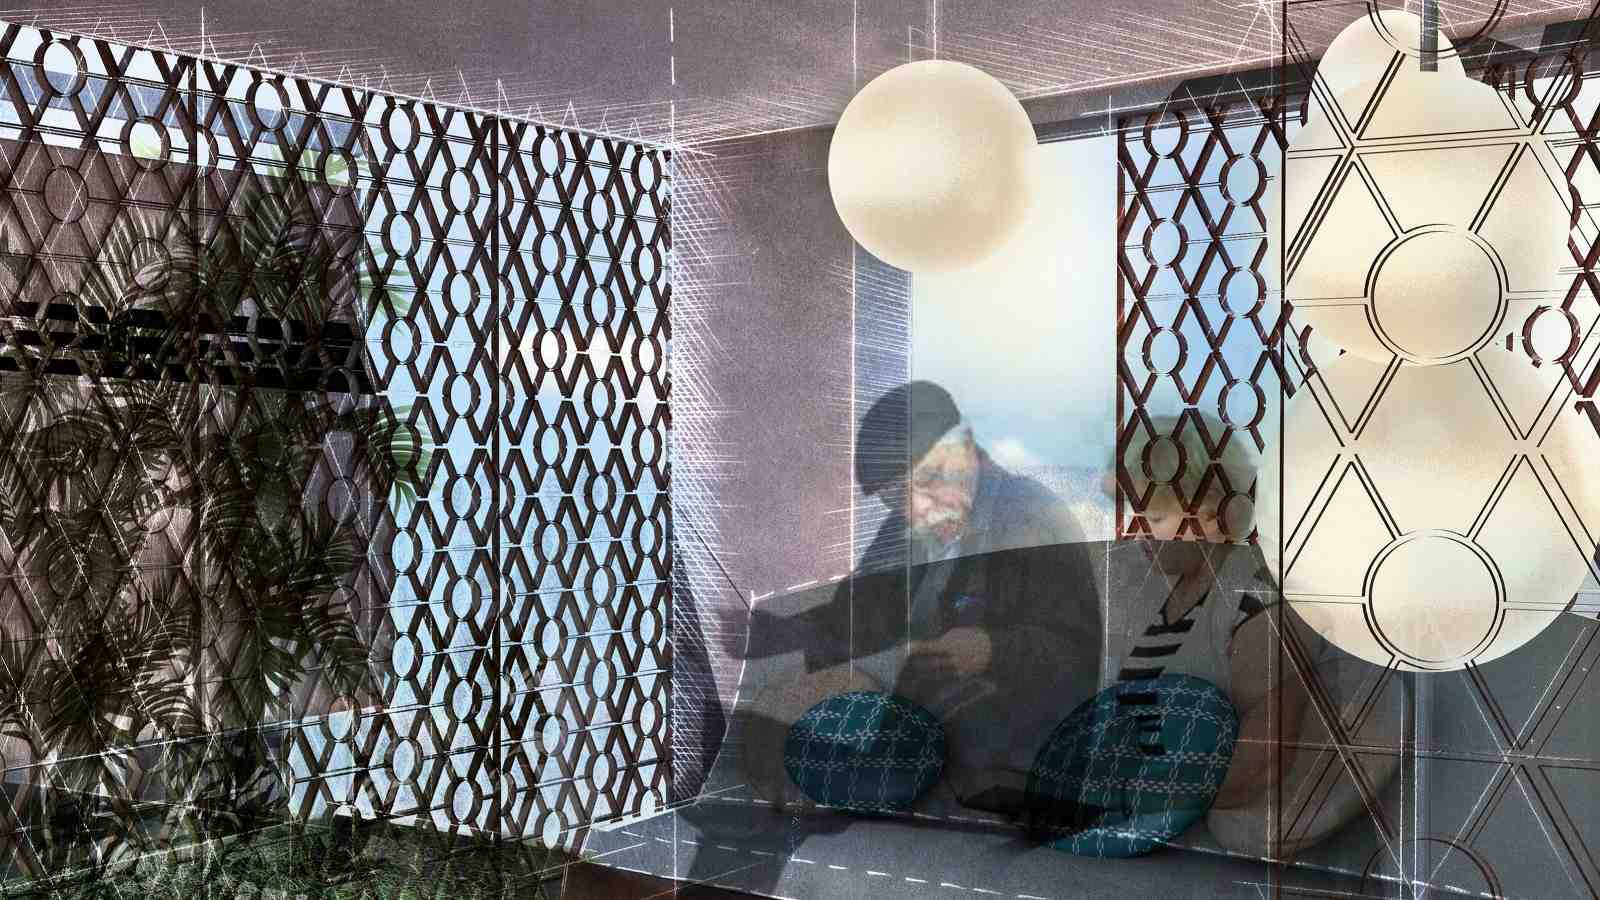 Sumaiya Abdul Rahman’s living space design, featuring mashrabiya (lattice-like screens to enhance privacy). 